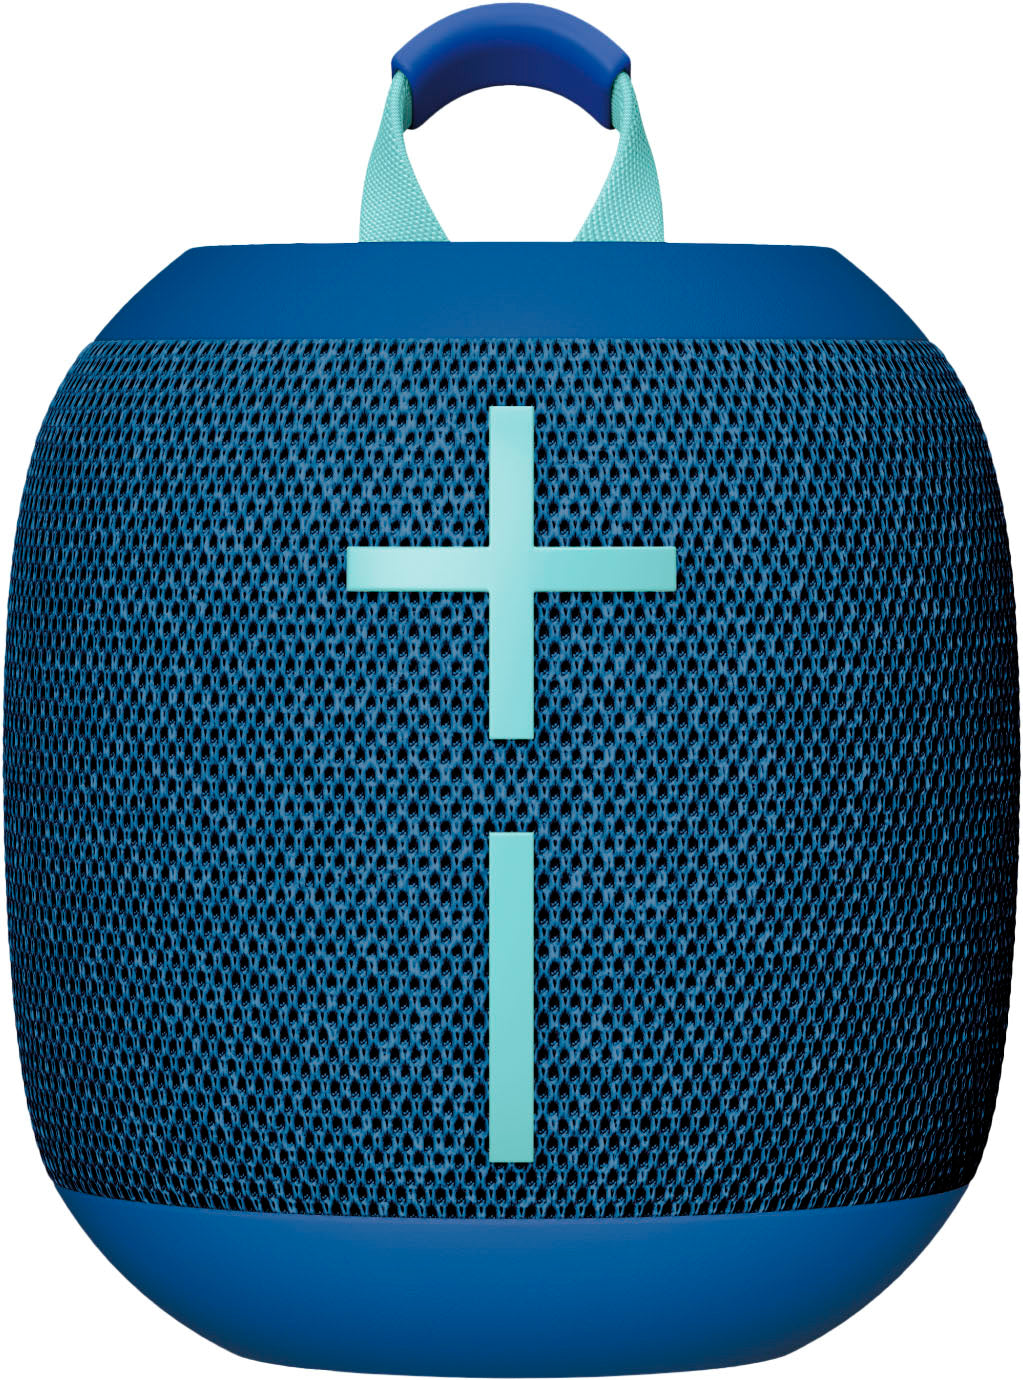 Ultimate Ears - WONDERBOOM 4 Portable Wireless Bluetooth Mini Speaker with Waterproof, Dustproof and Floatable design - Cobalt Blue_0